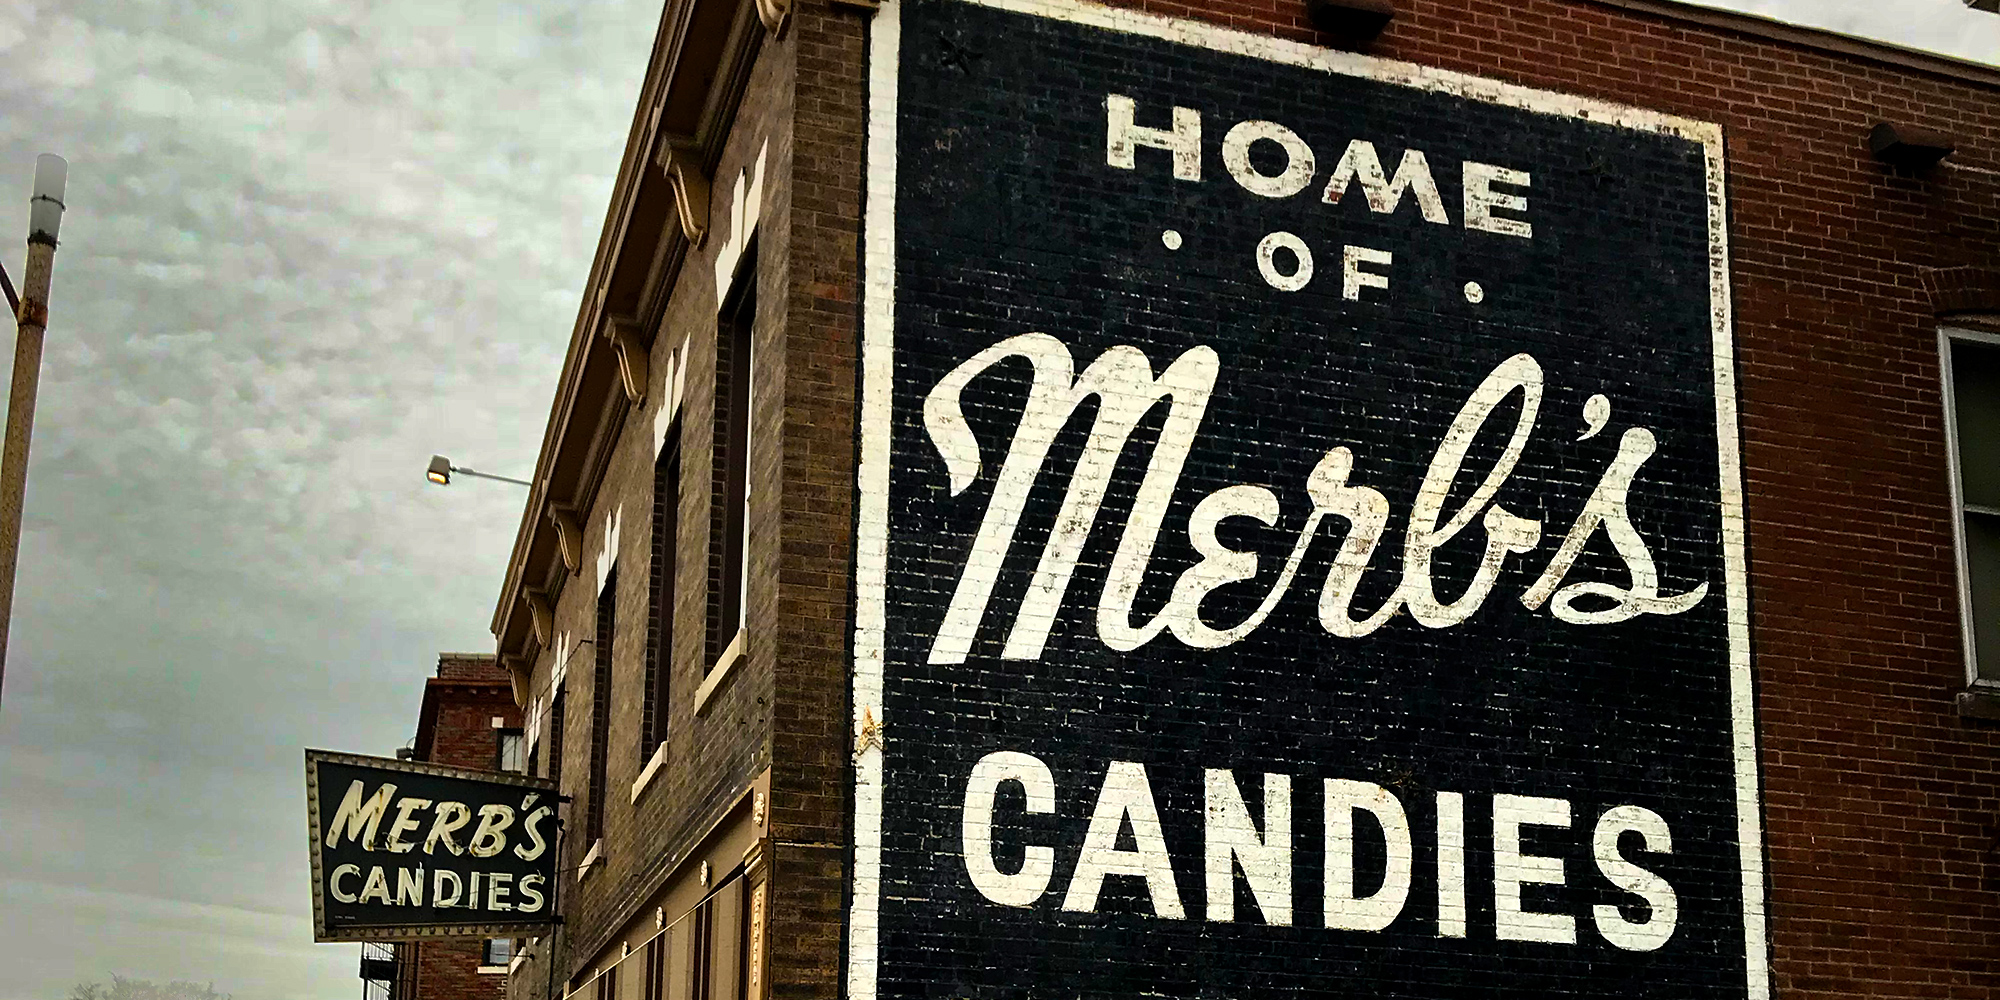 Merb's Candies on South Grand in Dutchtown, St. Louis, MO.